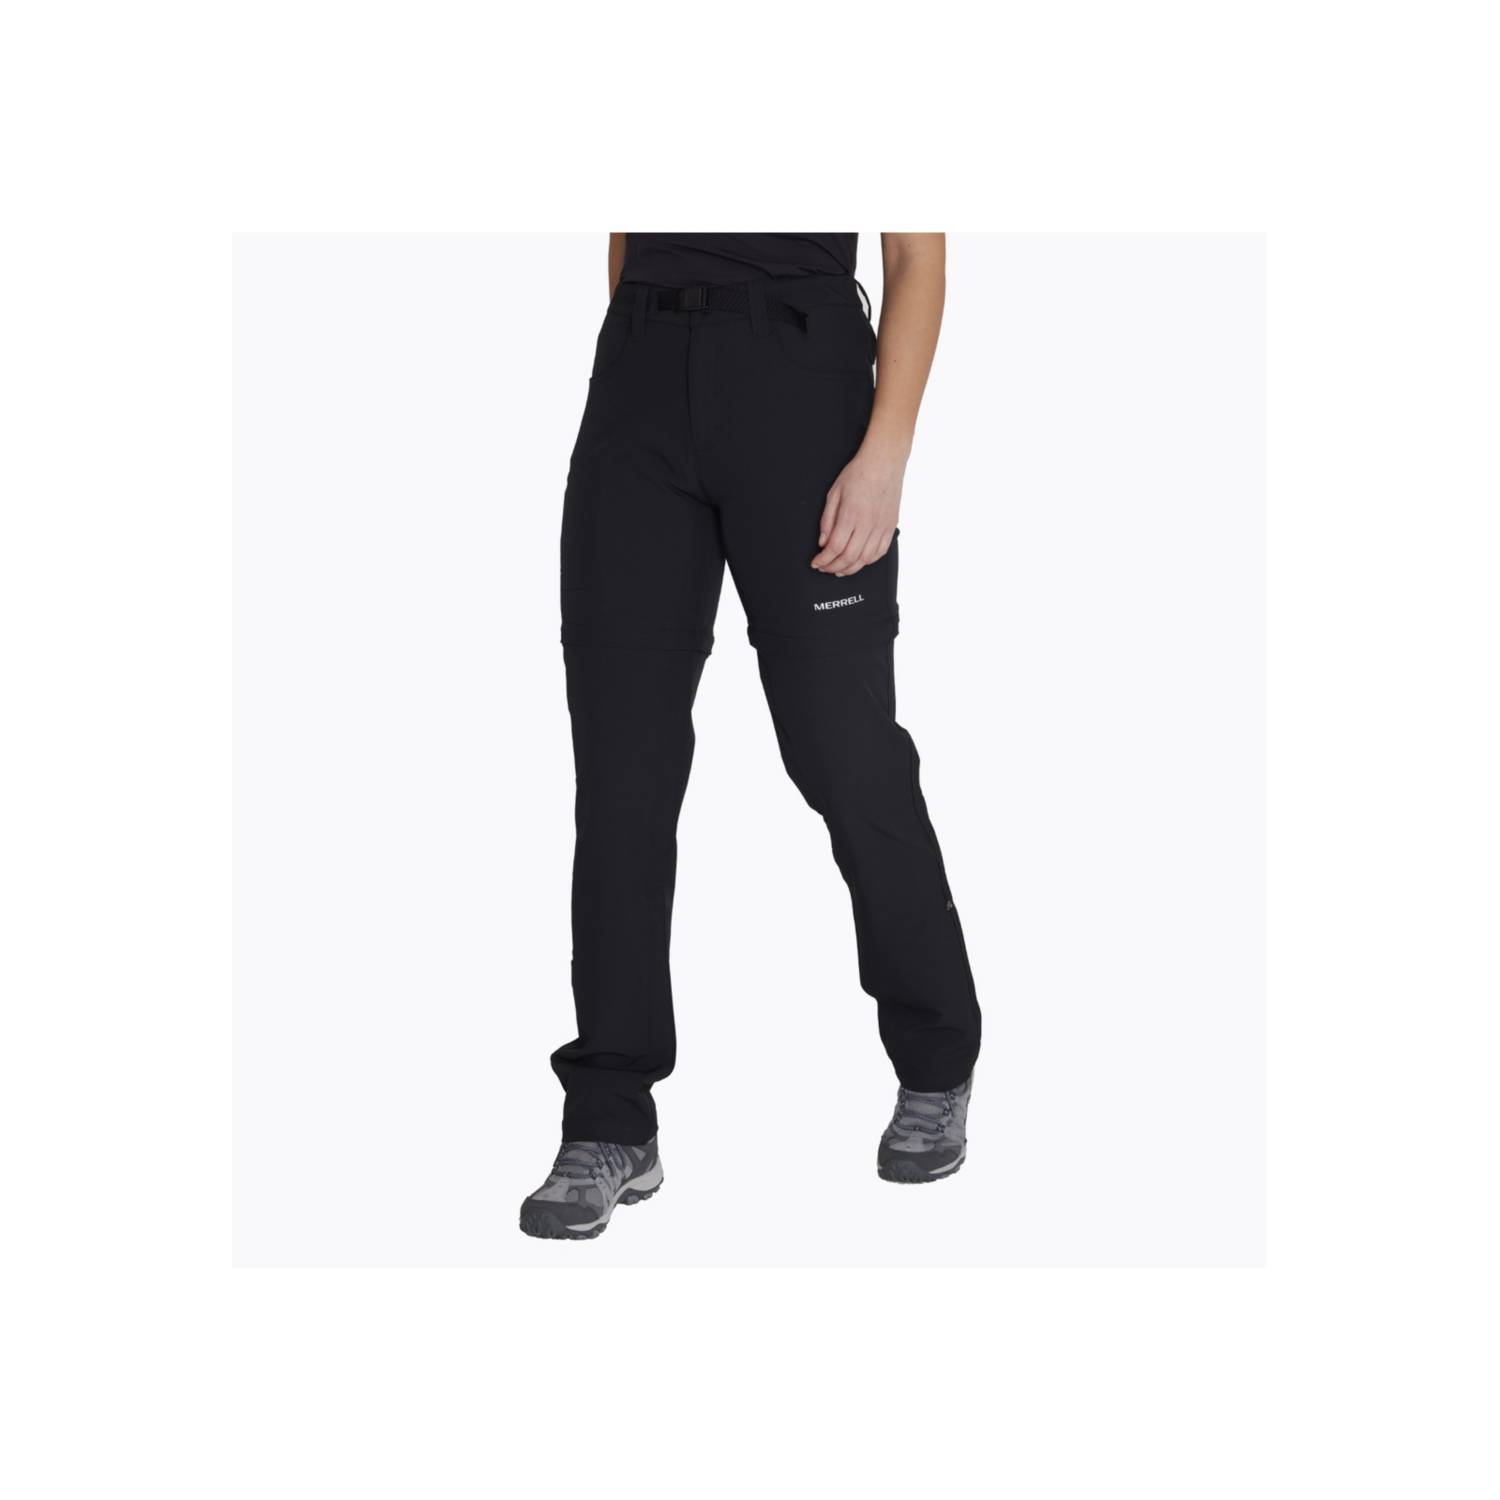 Nuevo Pantalón impermeable para hombre, color negro, talla S